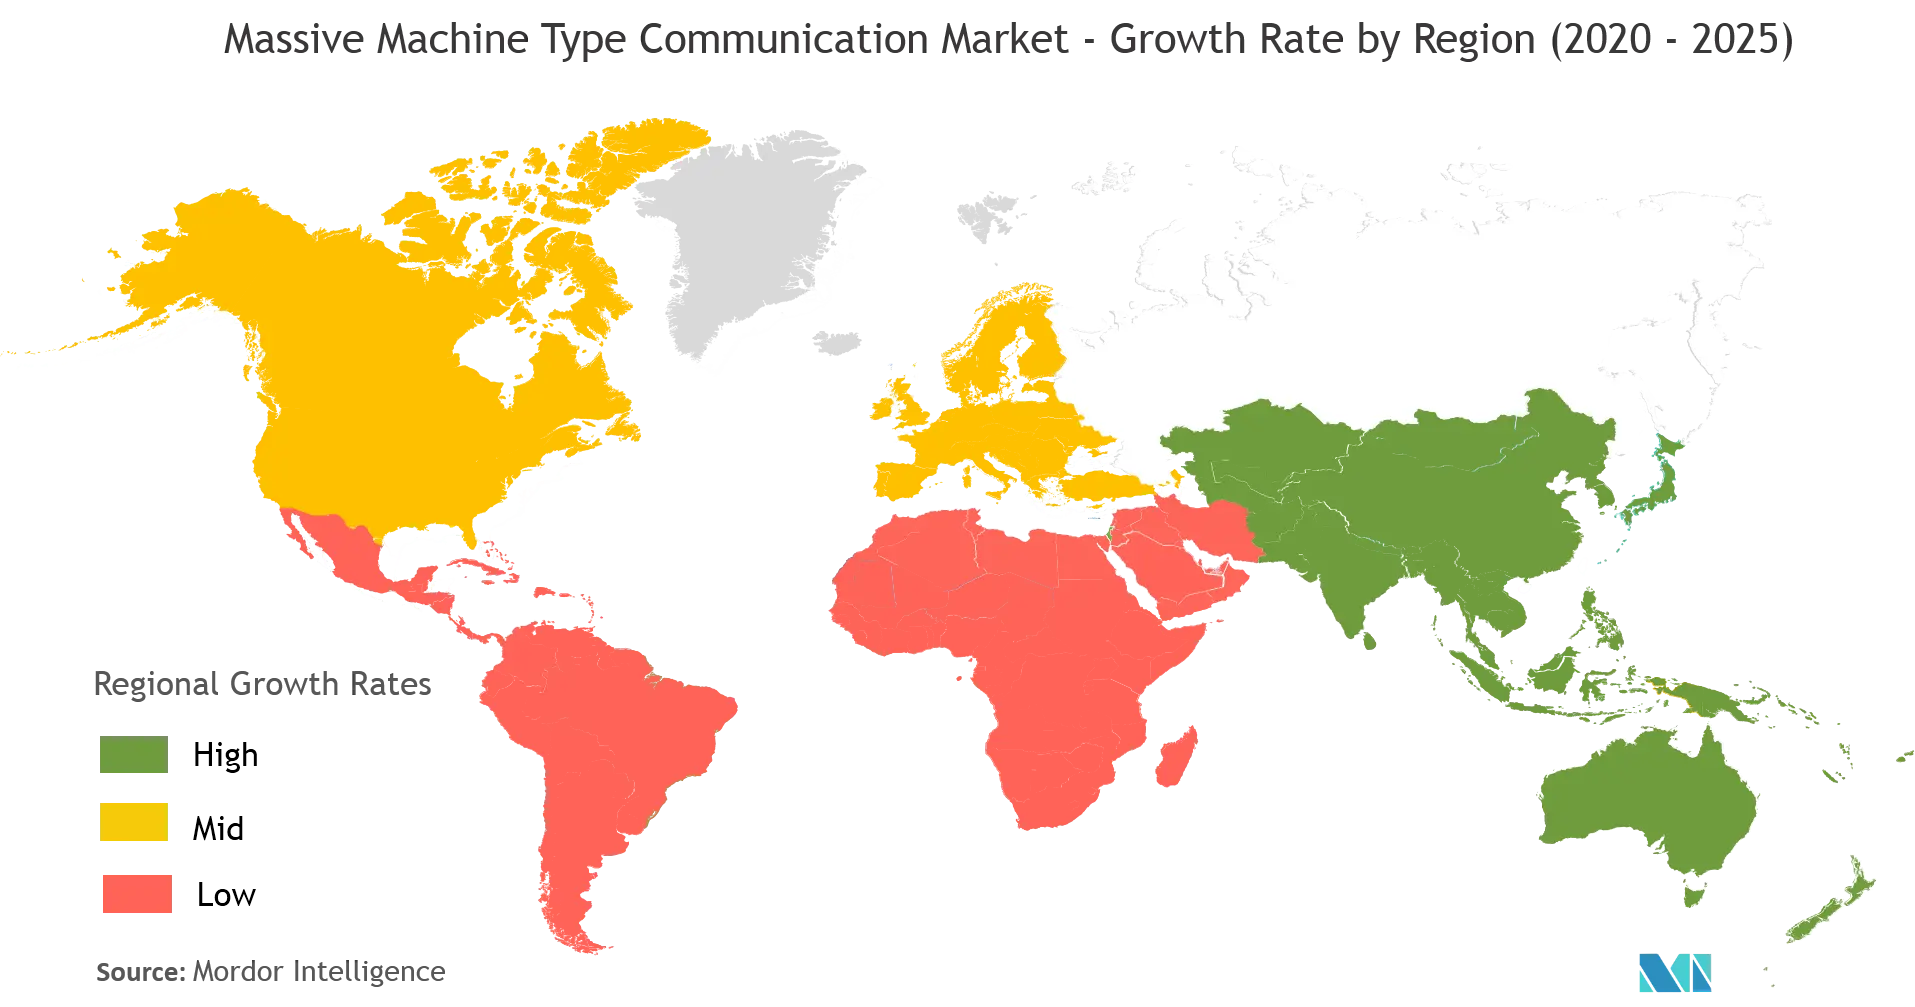 Massive Machine Type Communication Market Growth